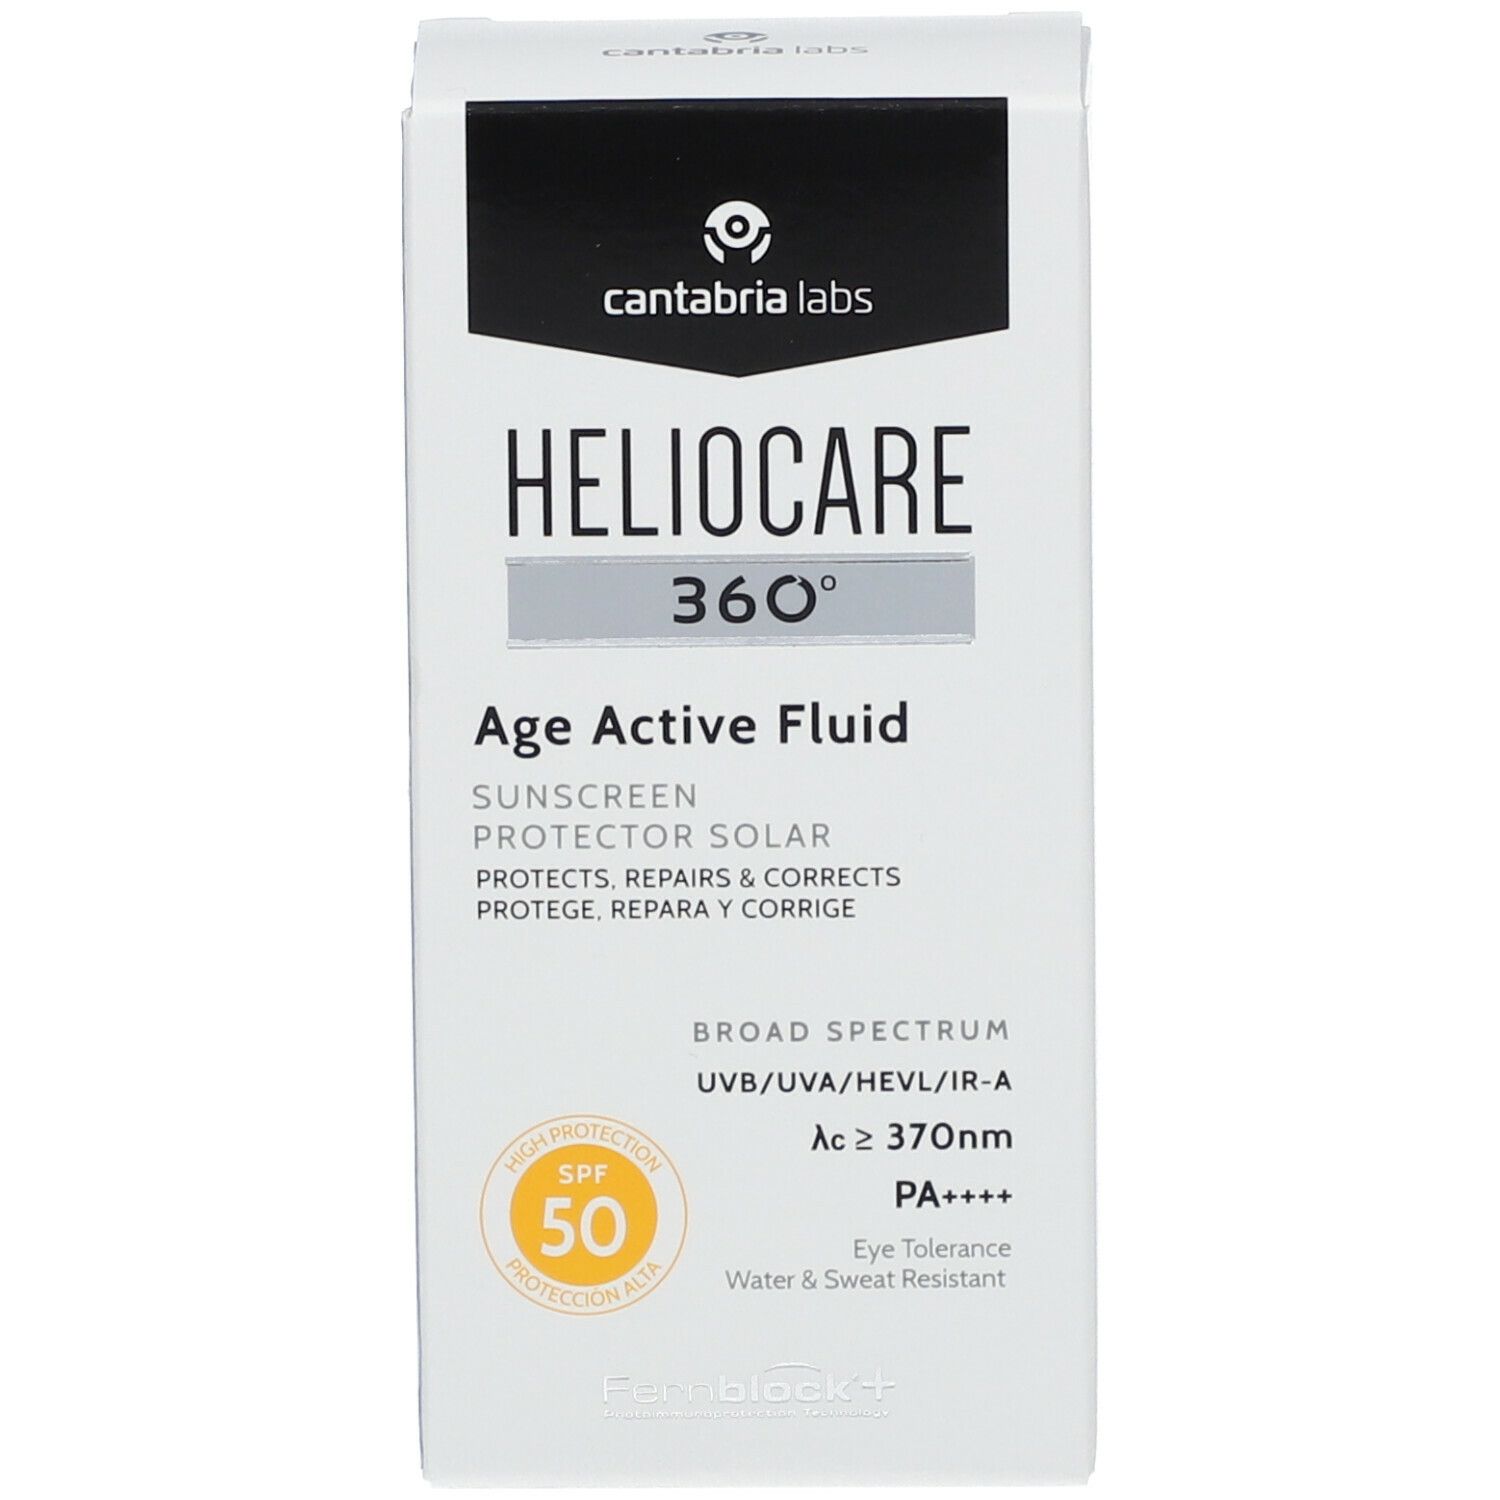 HELIOCARE® 360° Age Active Fluid SPF 50